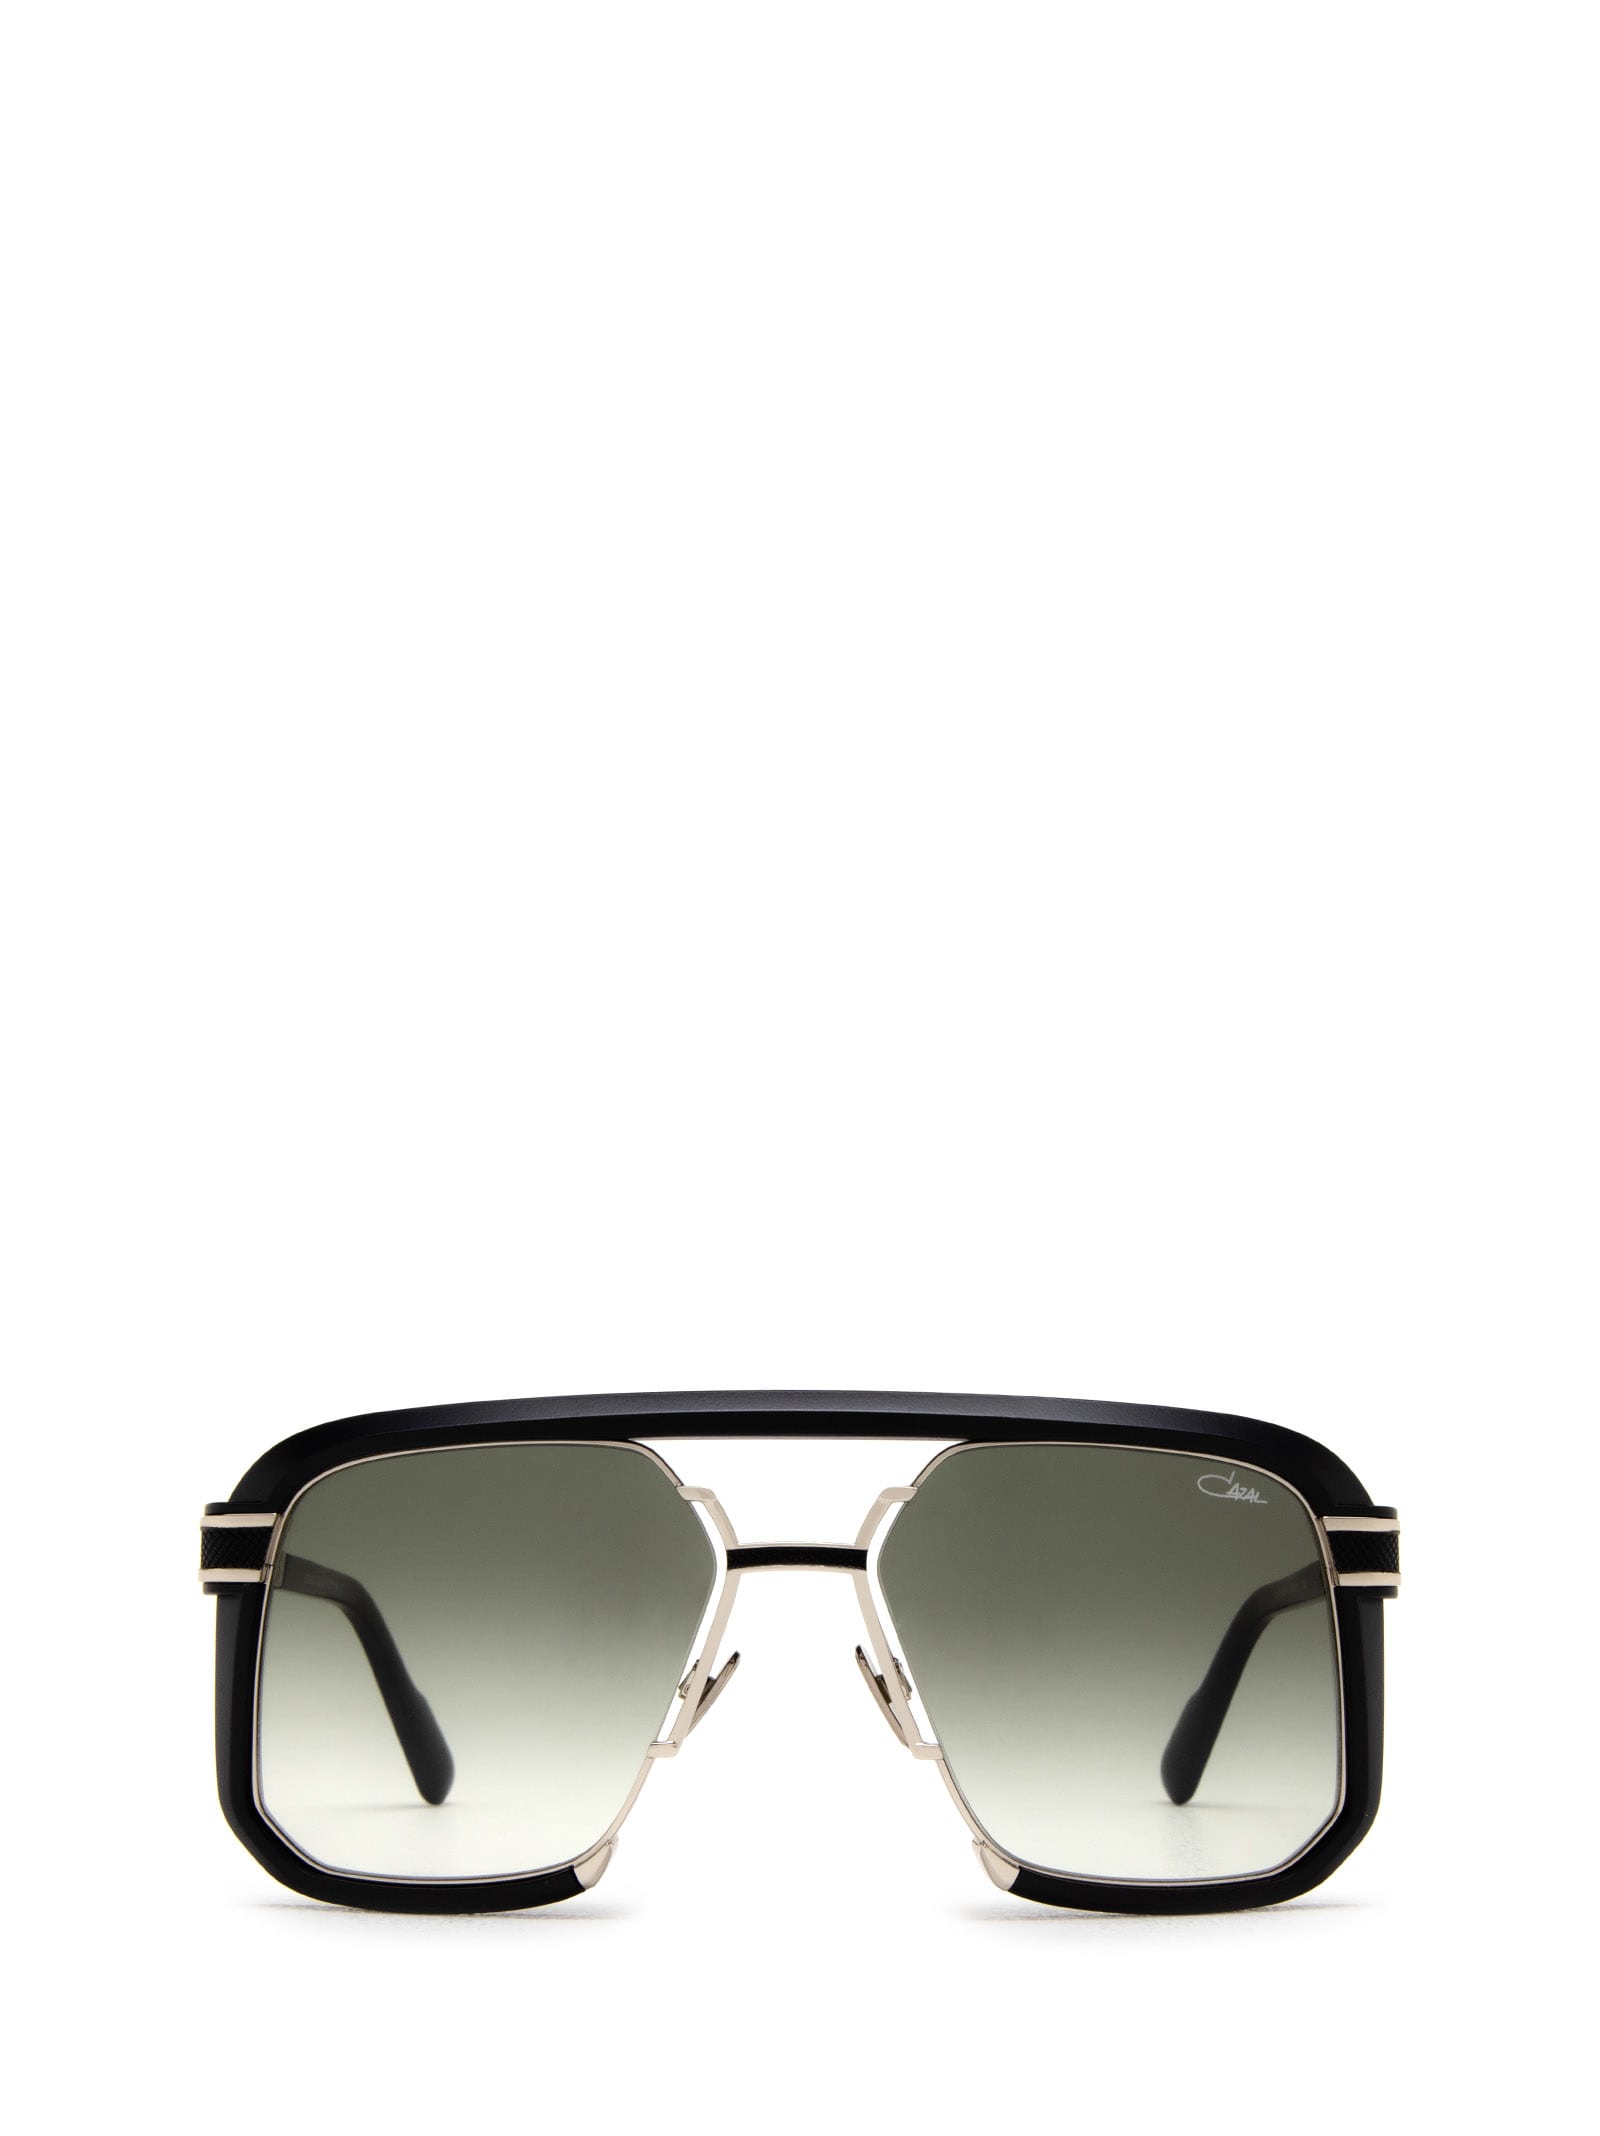 Cazal 682 Black - Silver Sunglasses